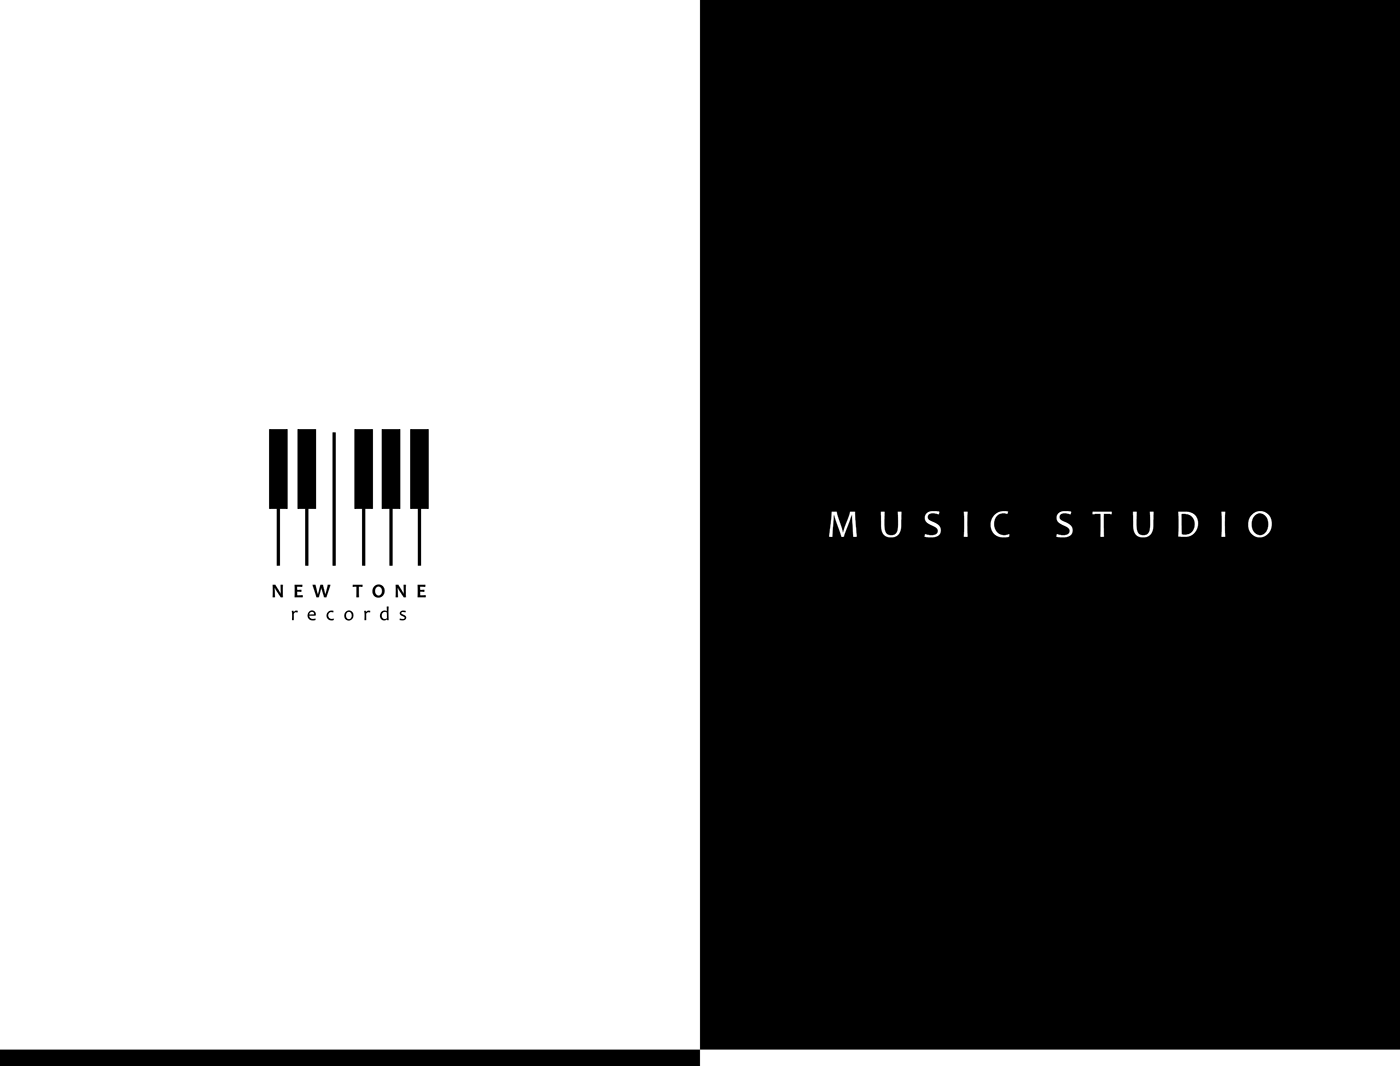 new tone records music studio logo design